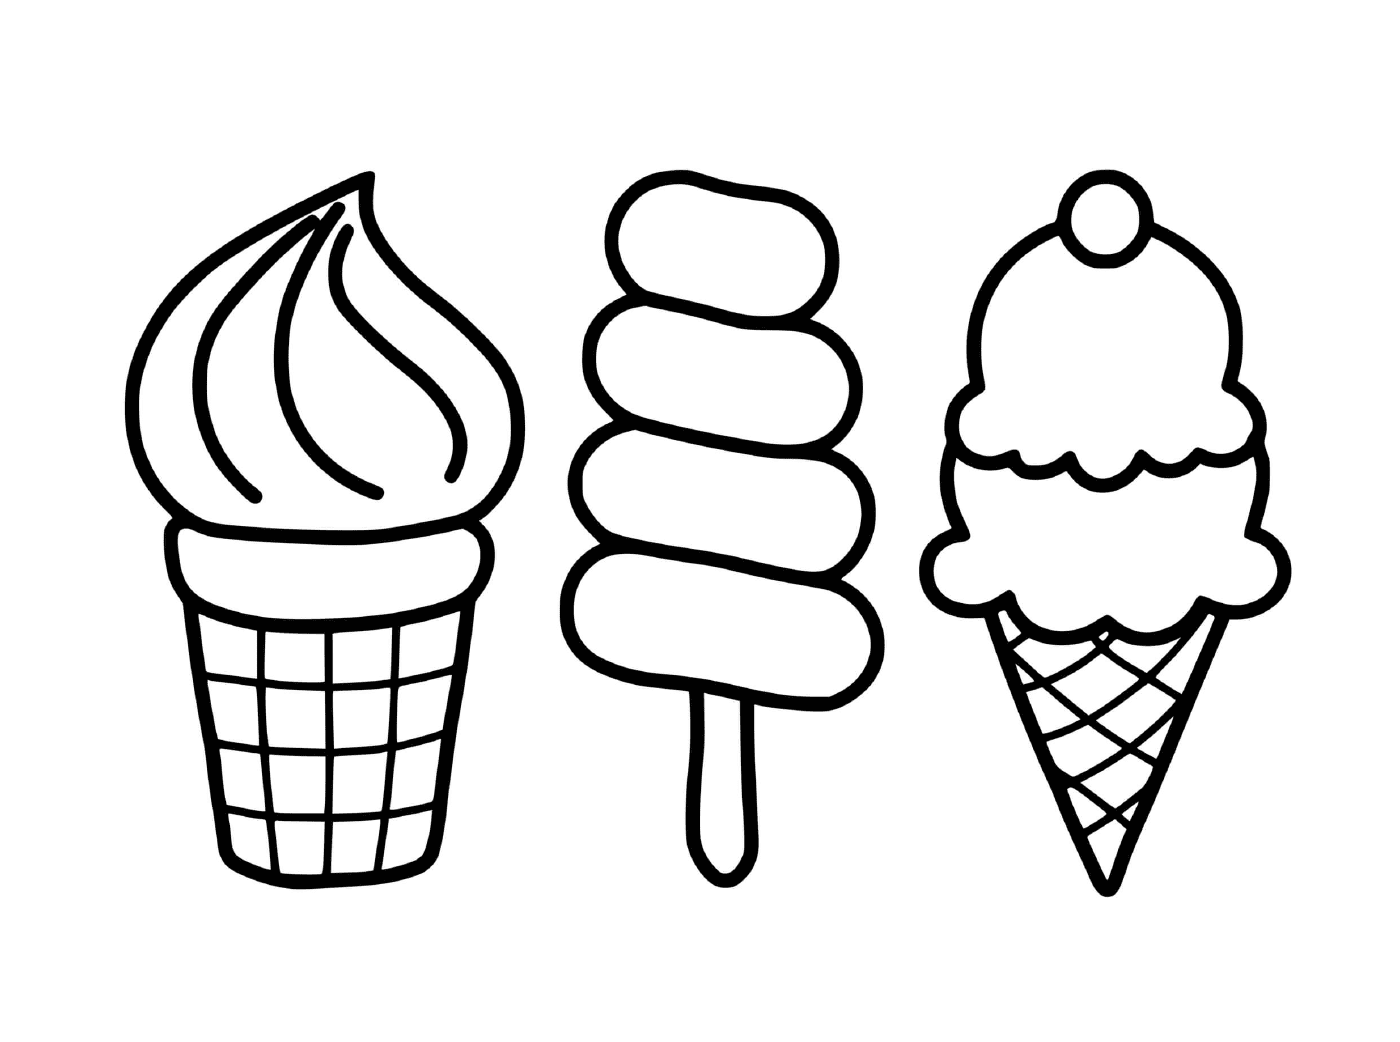  Três sabores de sorvete infantil 